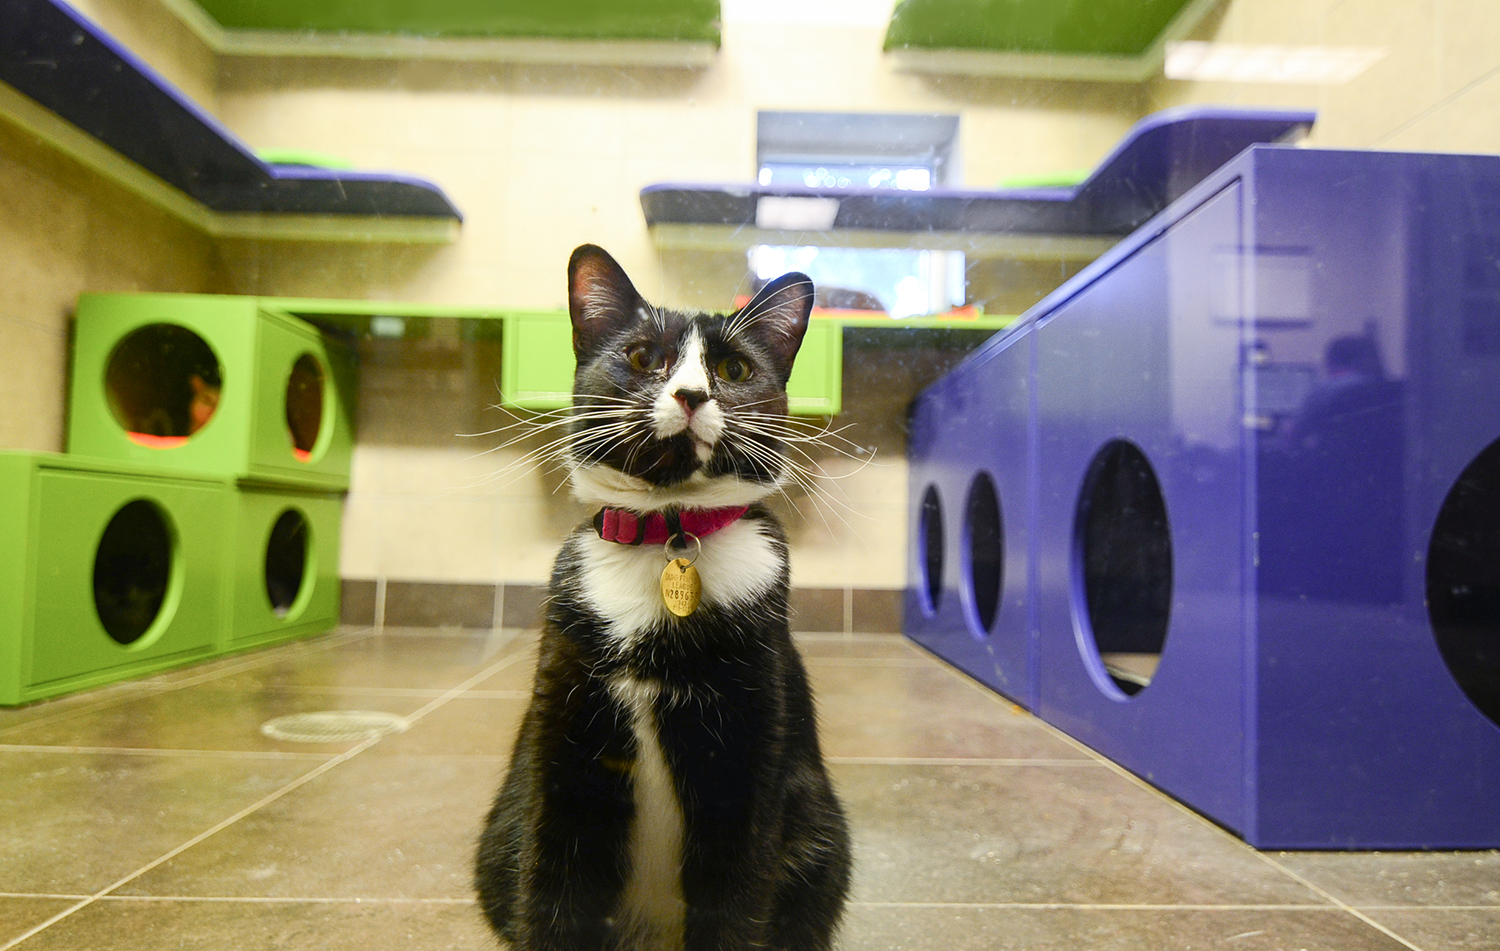 Silly Tuxedo Cat at Denver Dumb Friends League Cat Room - Shelter Catification